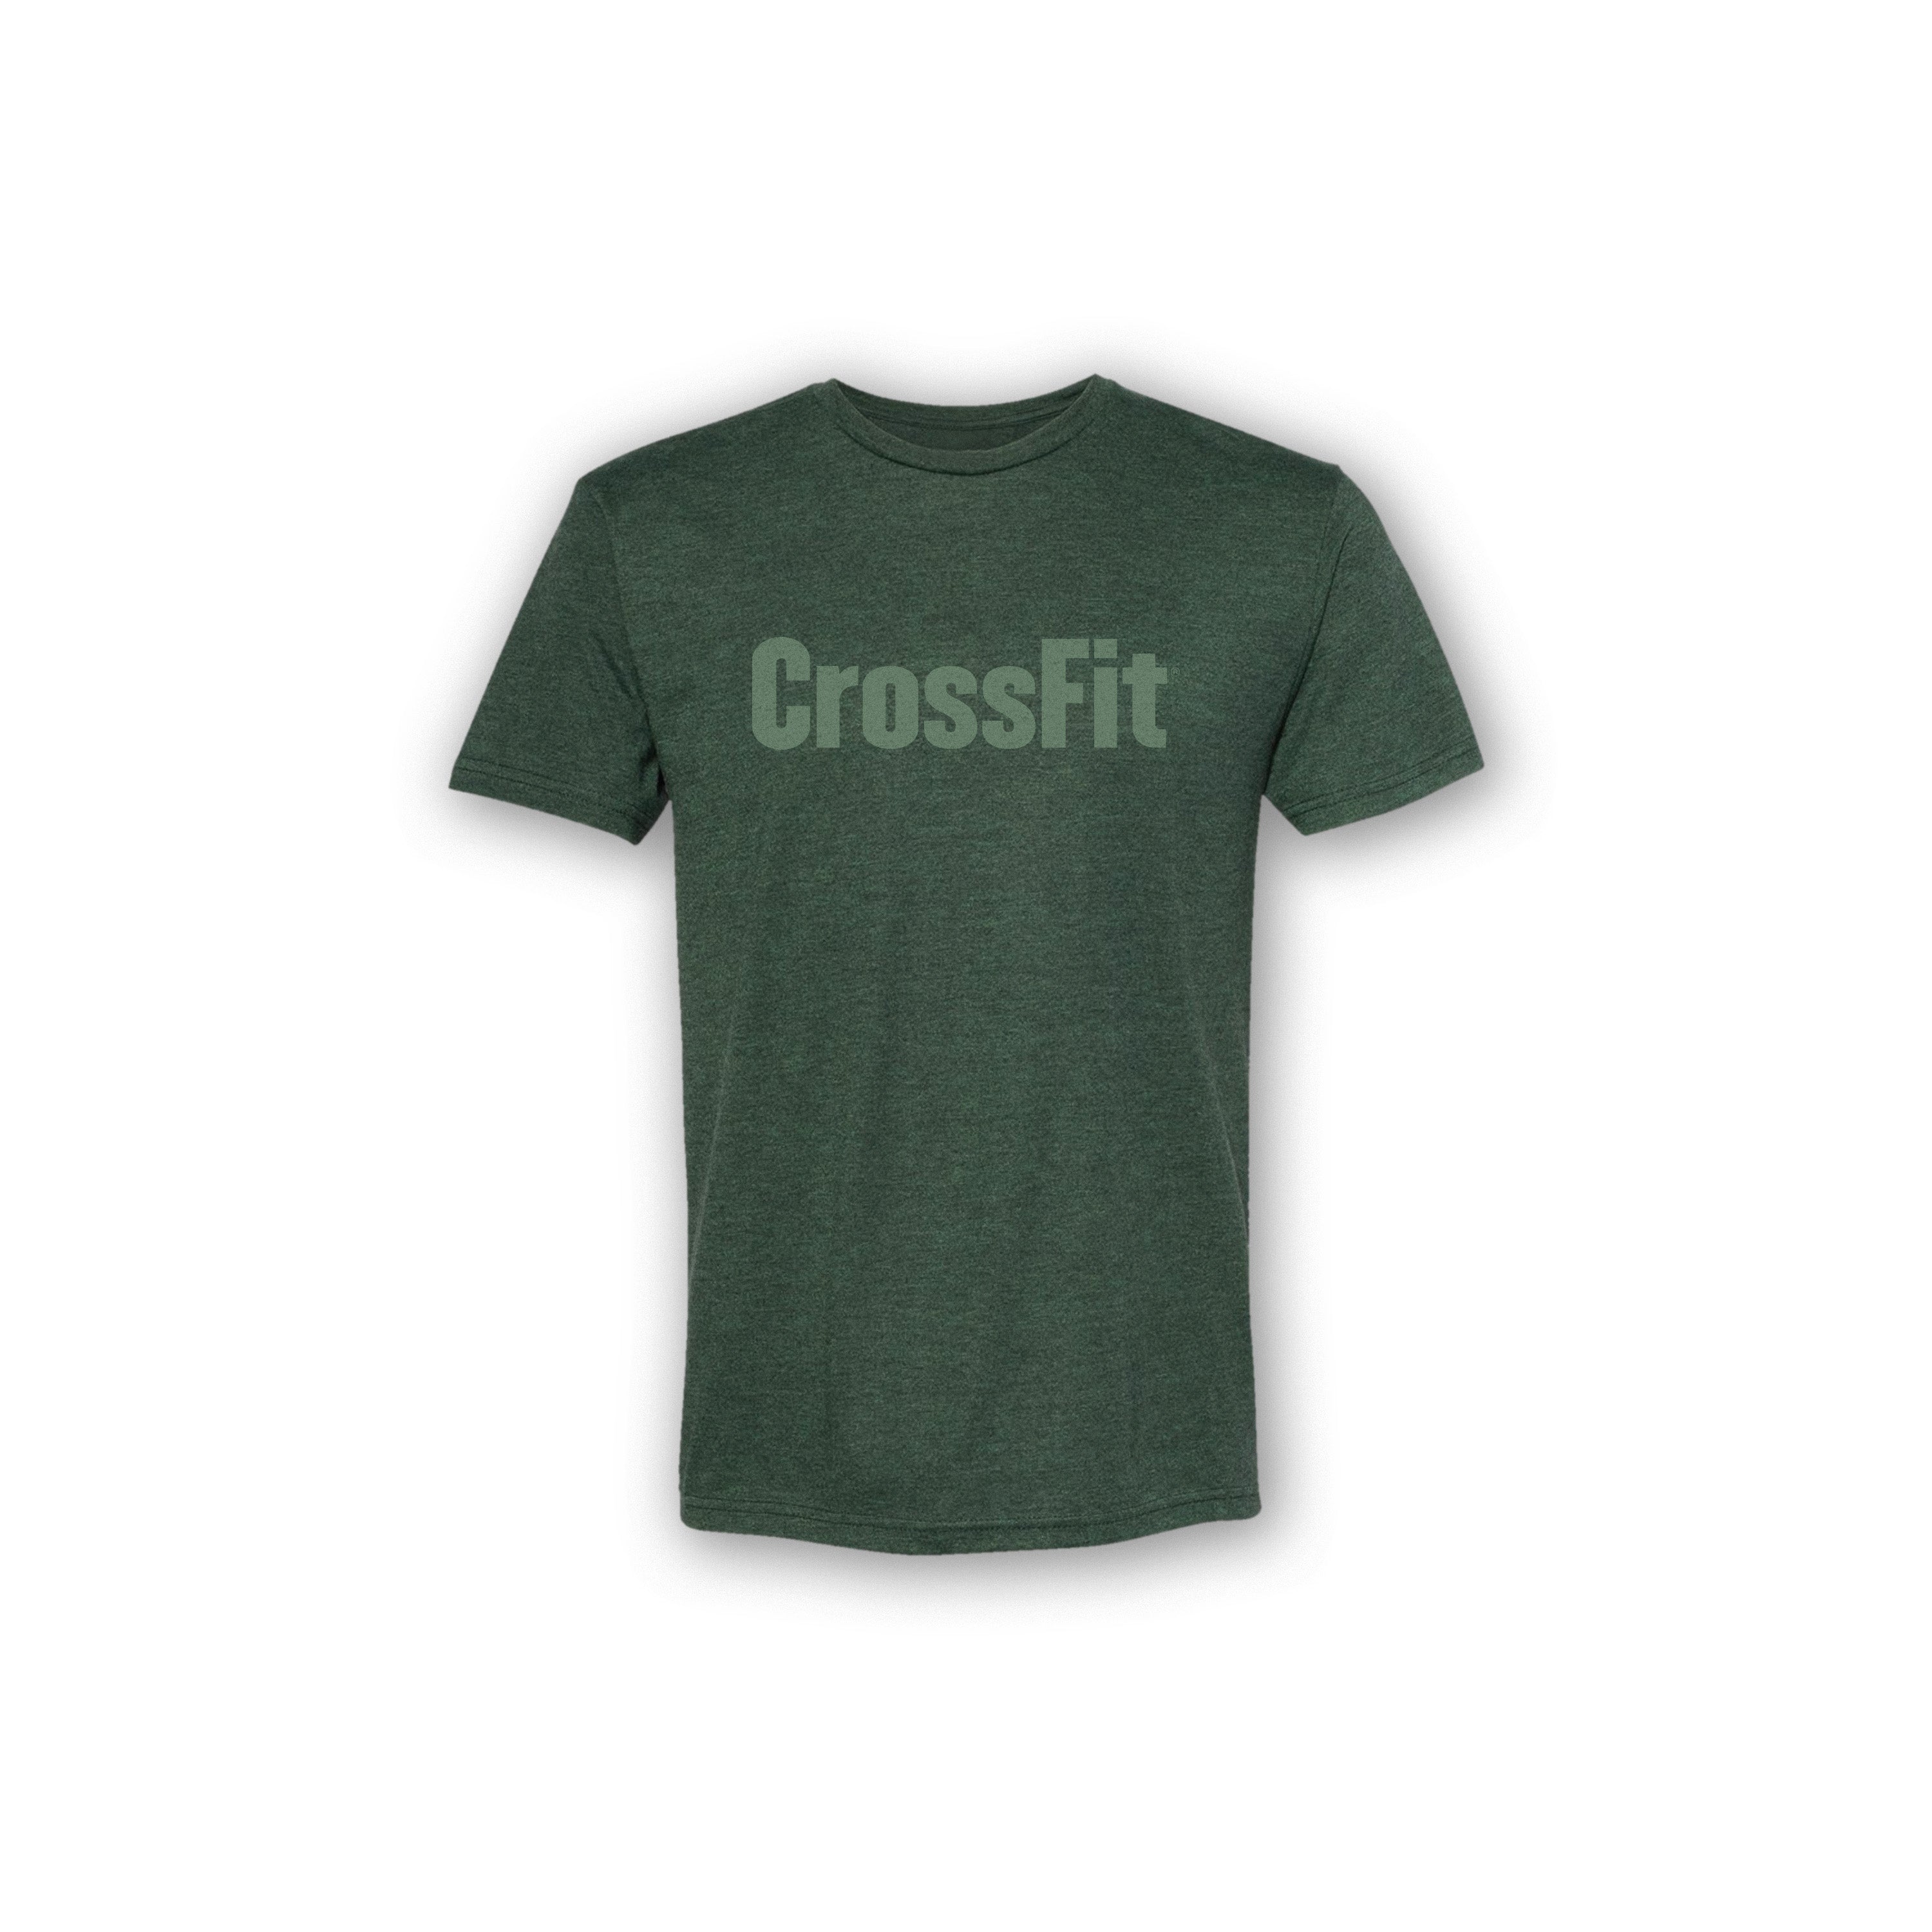 CrossFit Tonal T-Shirt - Forest Green